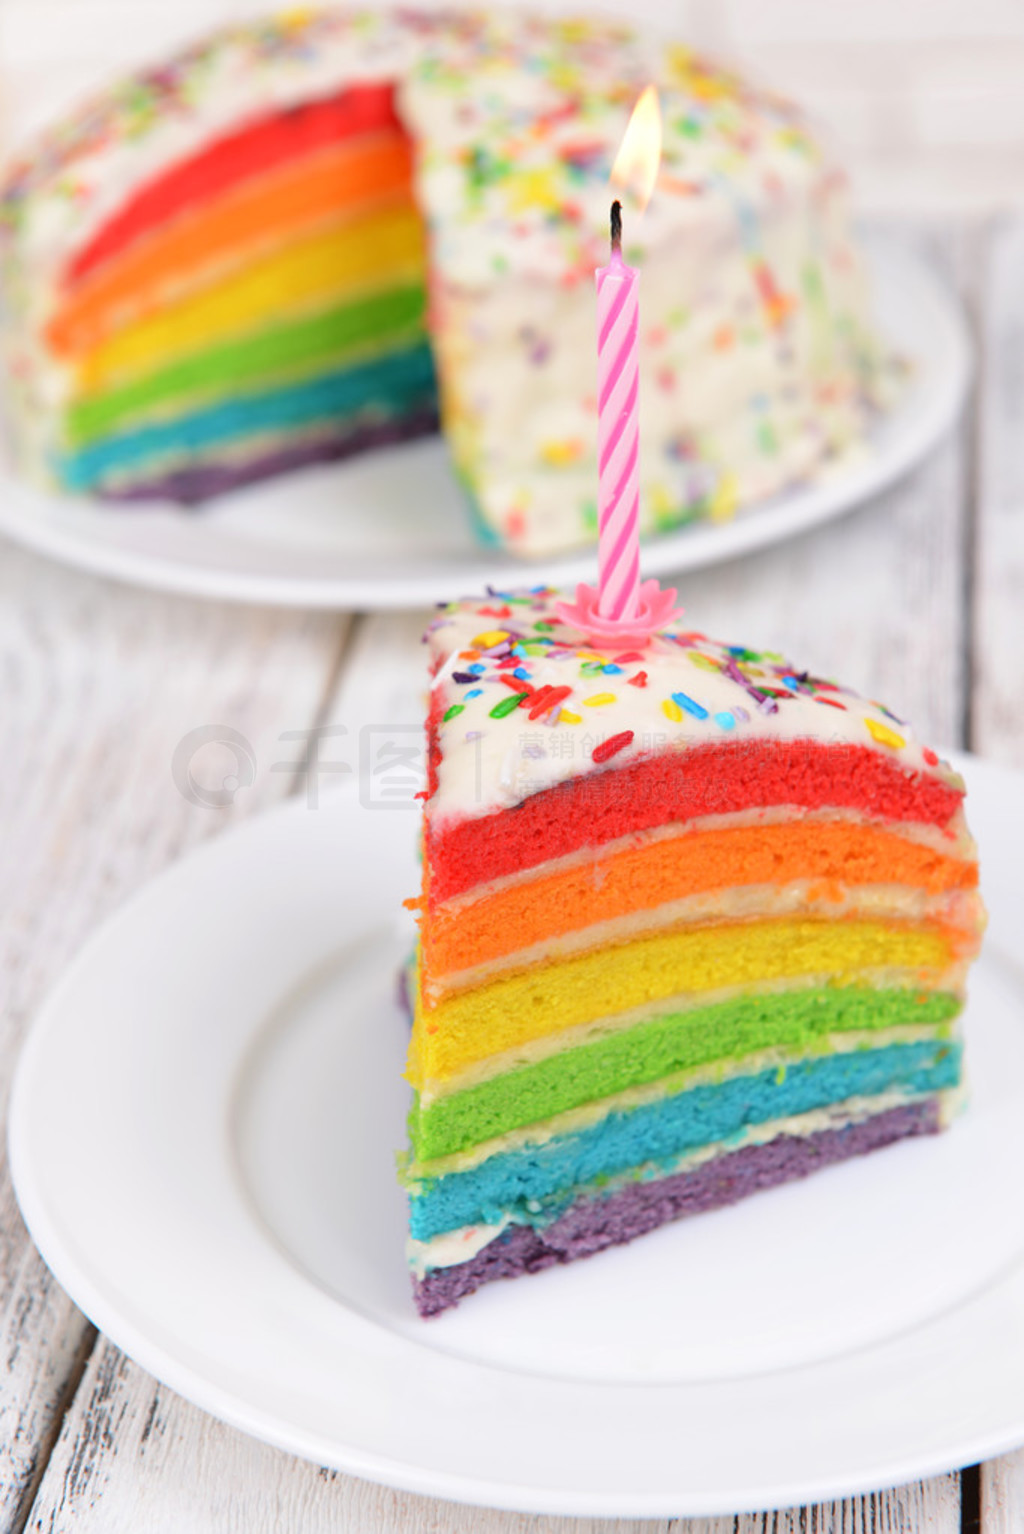 l?ckra rainbow cake p? tallriken p? bordet p? ljus bakgrund